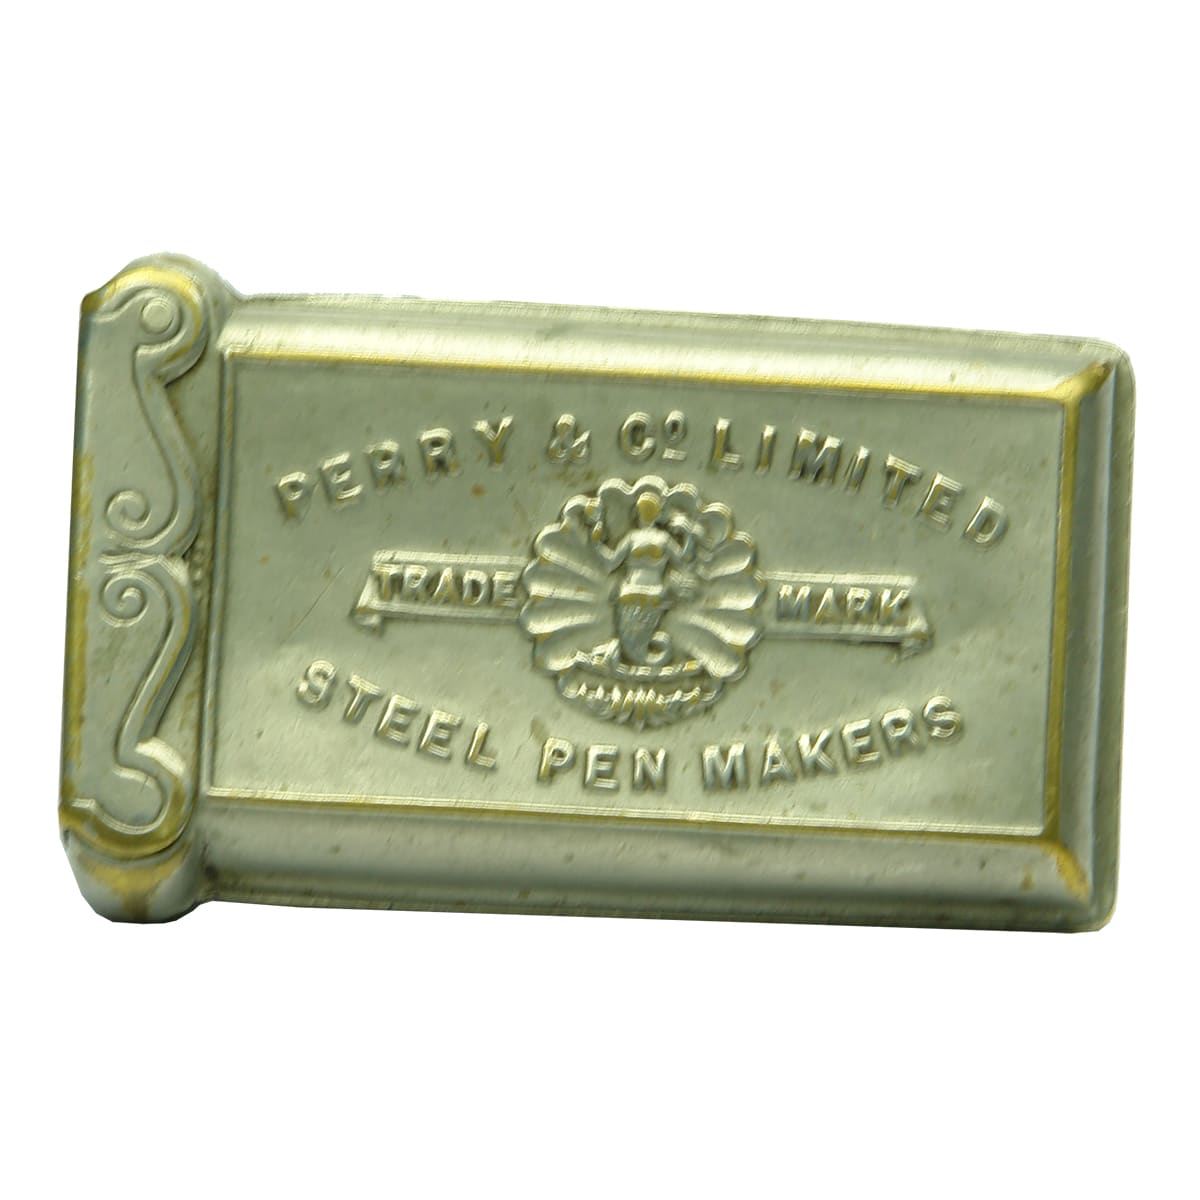 Vesta Case. Queen Victoria 1887 Jubilee. Perry & Co Limited Steel Pen Makers.